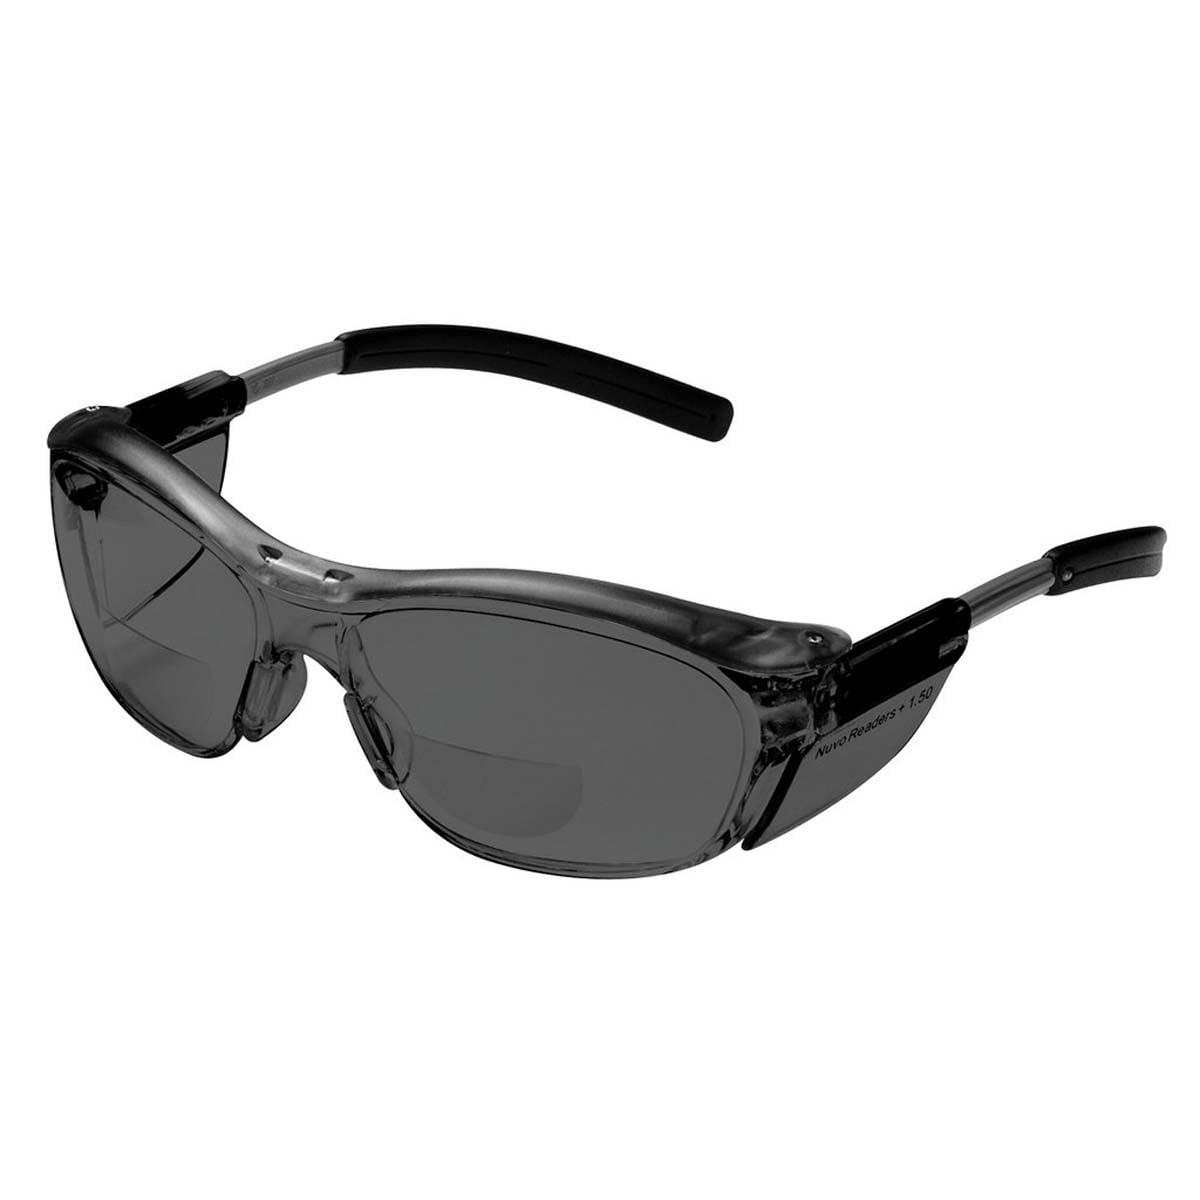 3M Nuvo Protective Reader Eyewear - Walmart.com